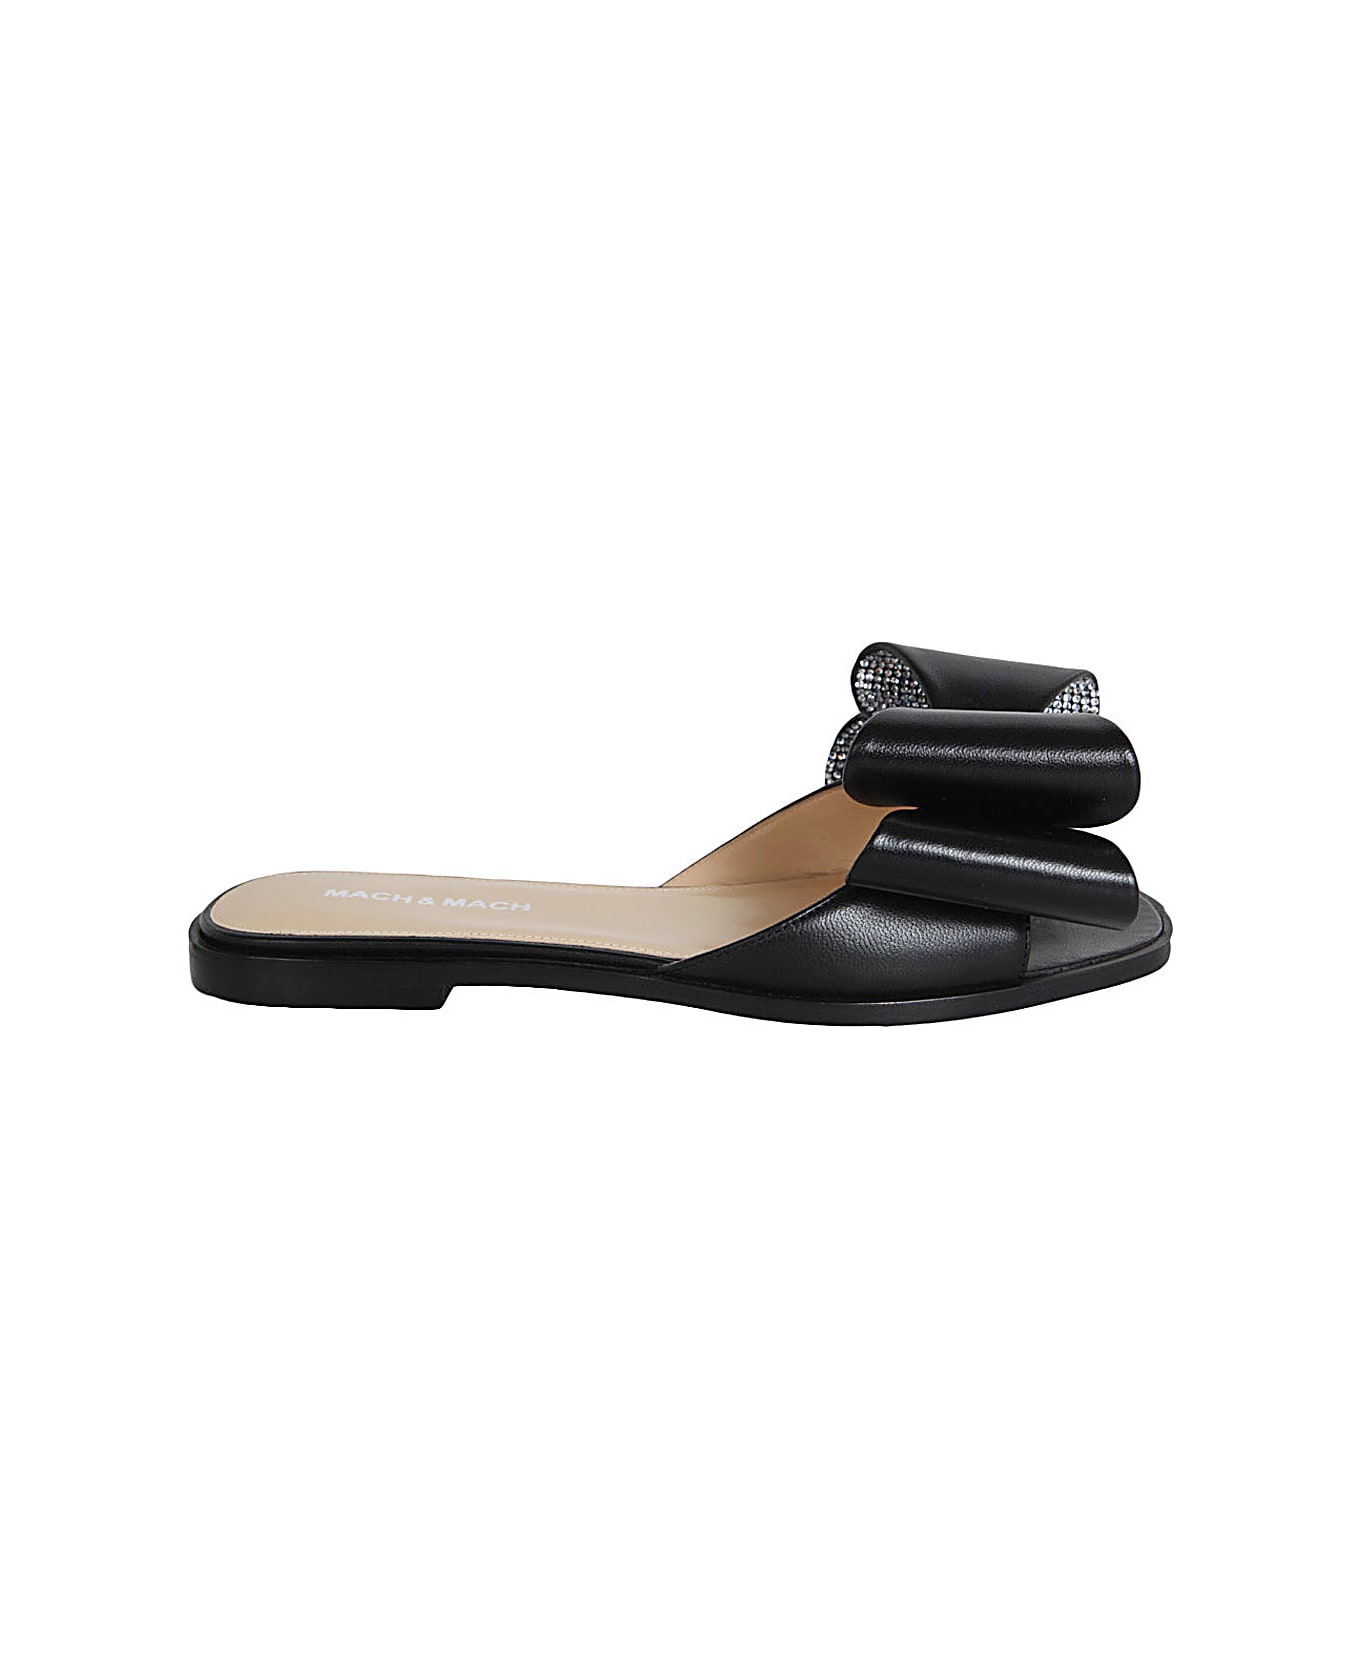 Mach & Mach Cadeau Nappa Leather Flat Sandal - Black